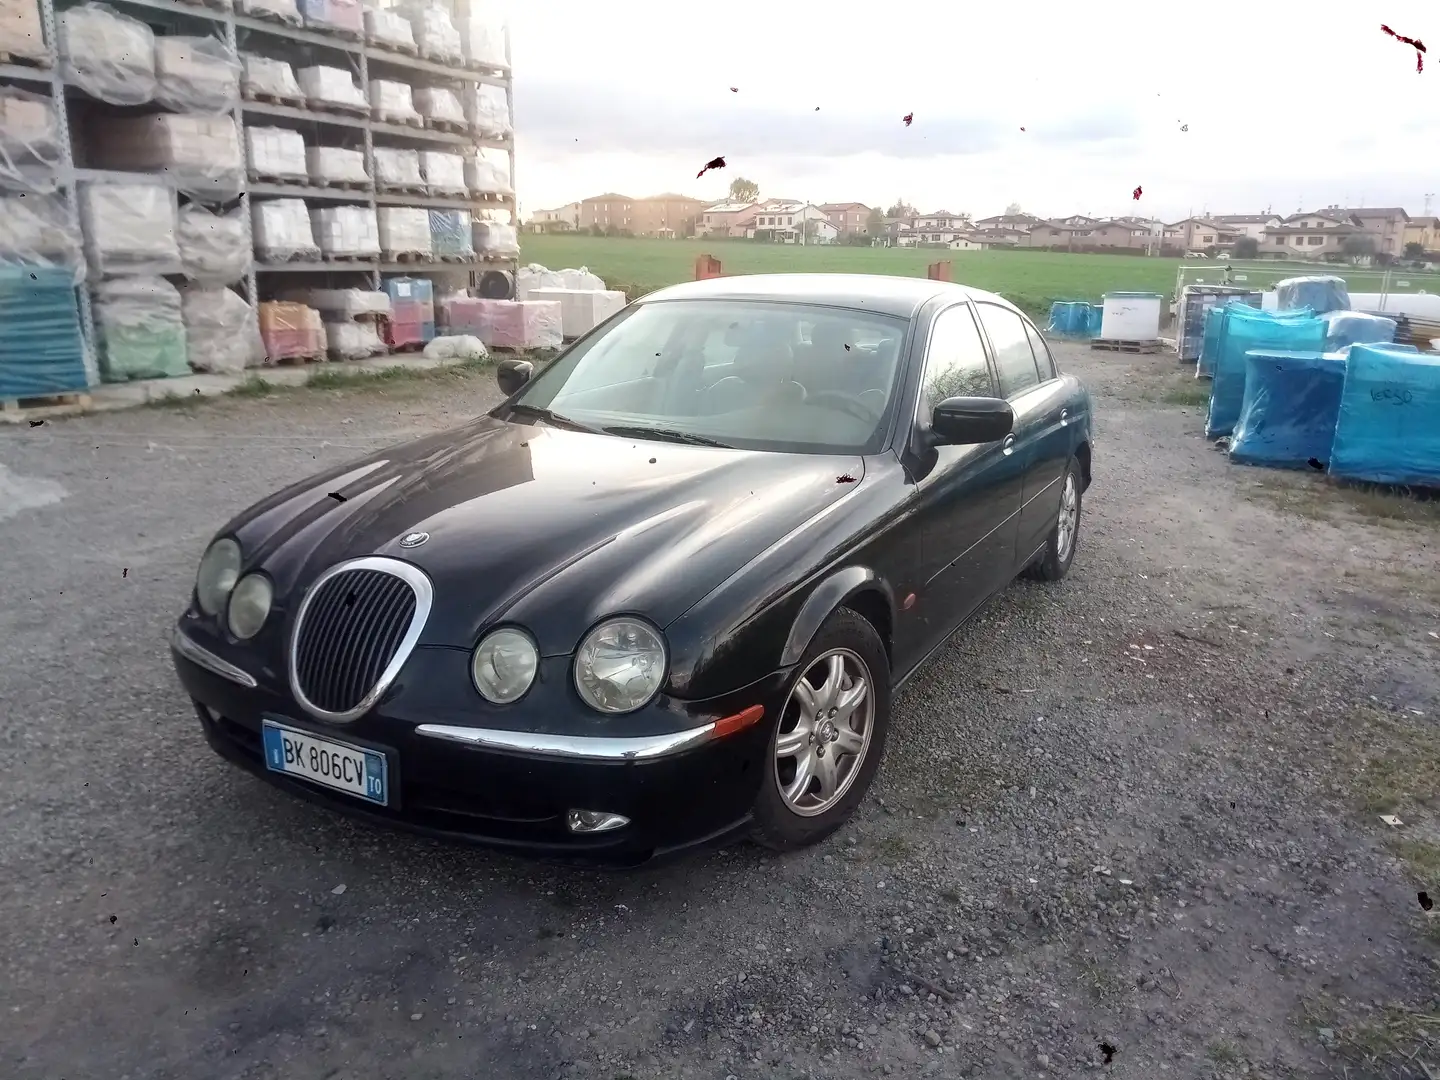 usato Jaguar S-Type Berlina a Reggio Emilia per € 5.800,-